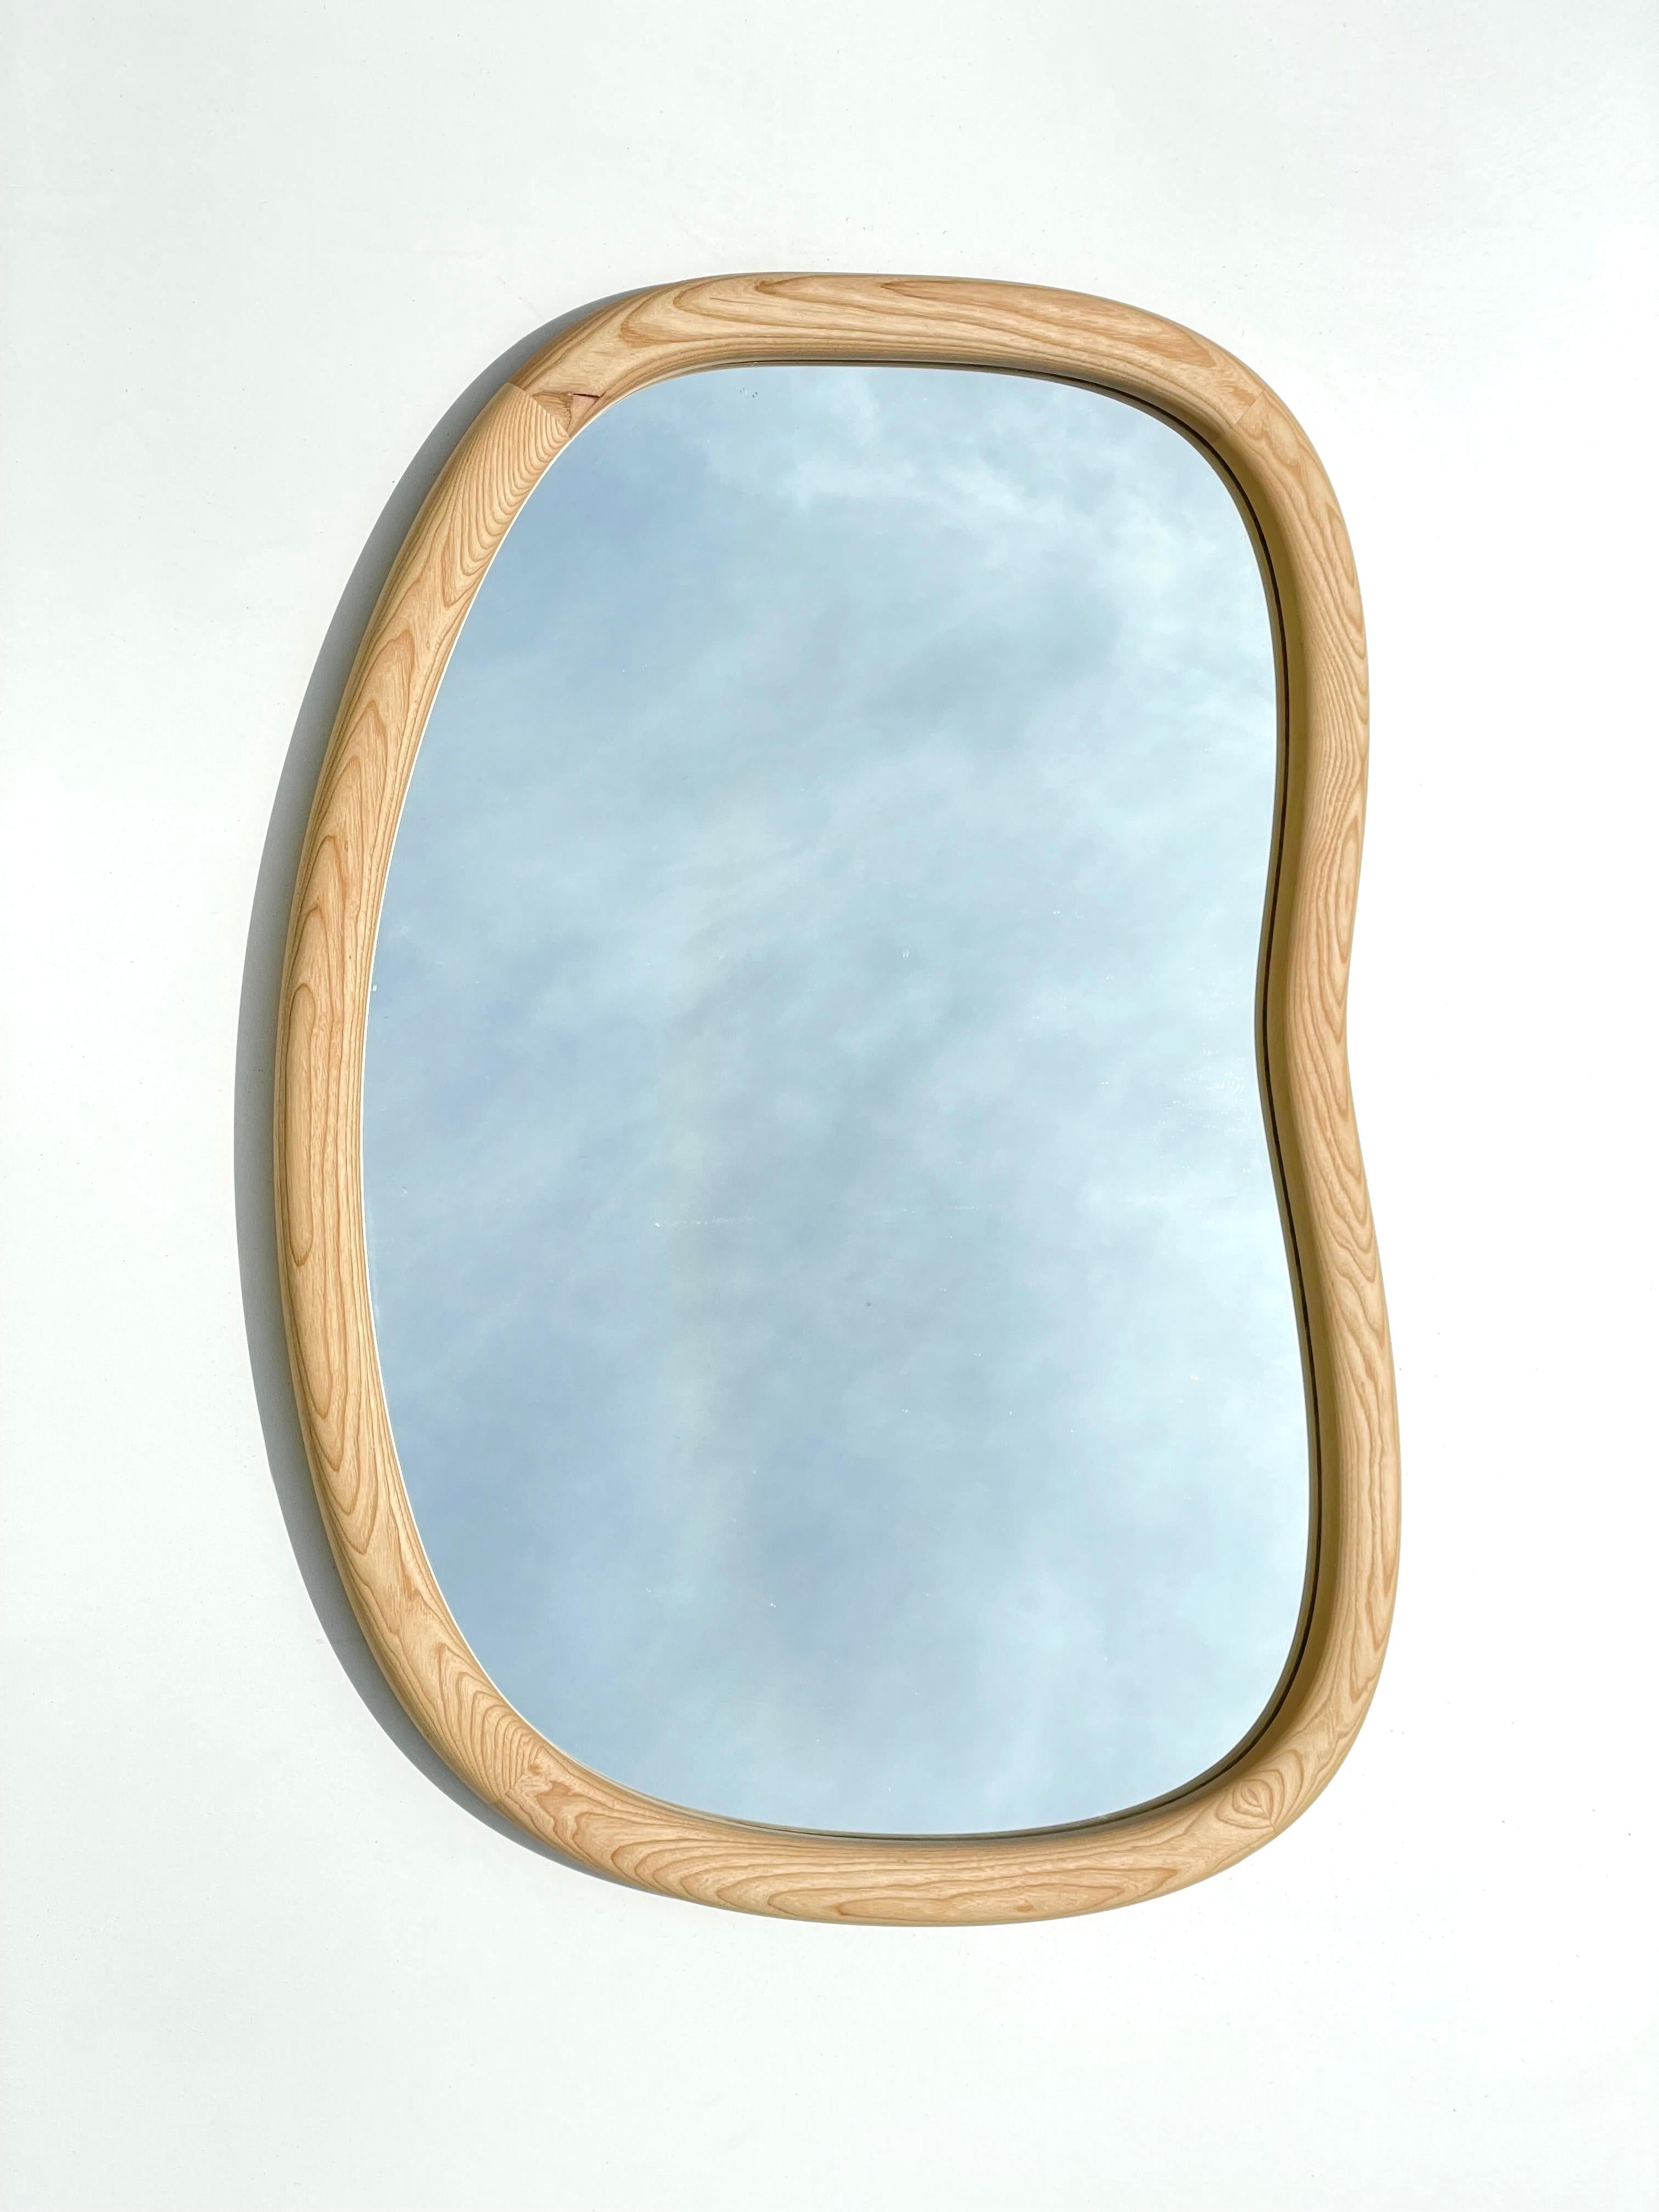 Organic Modern Sarpa mirror - medium size wall mirror in natural ash by KLN Studio For Sale